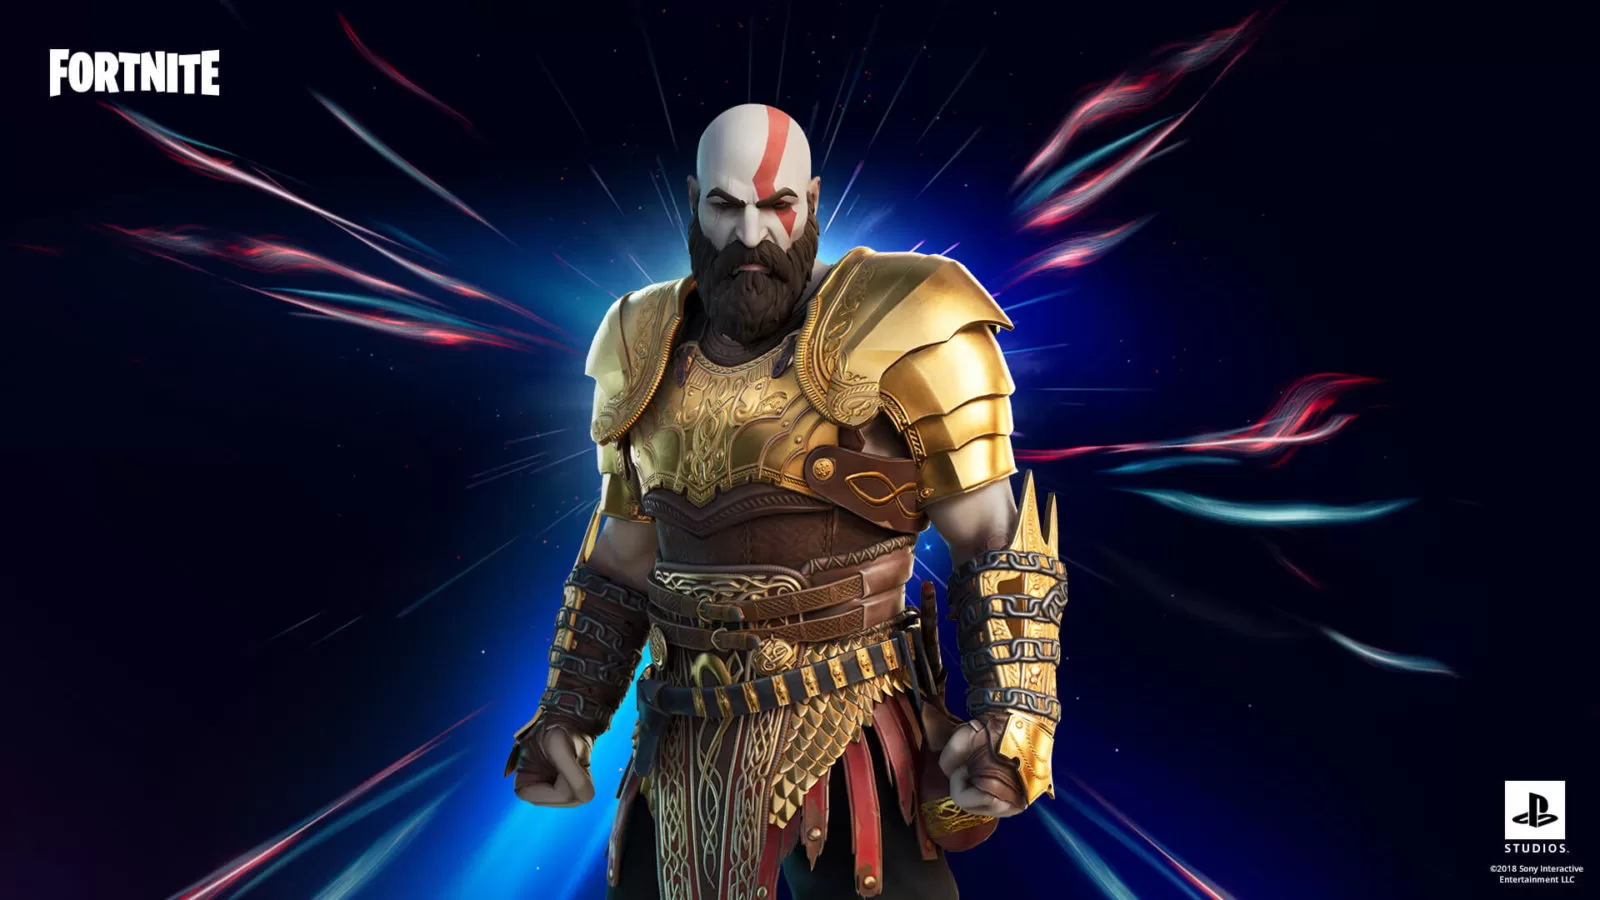 fortnite kratos armored style outfit 1920x1080 693045924 | Kratos จาก God Of War เข้าสู่สนามรบแล้วใน Fortnite!